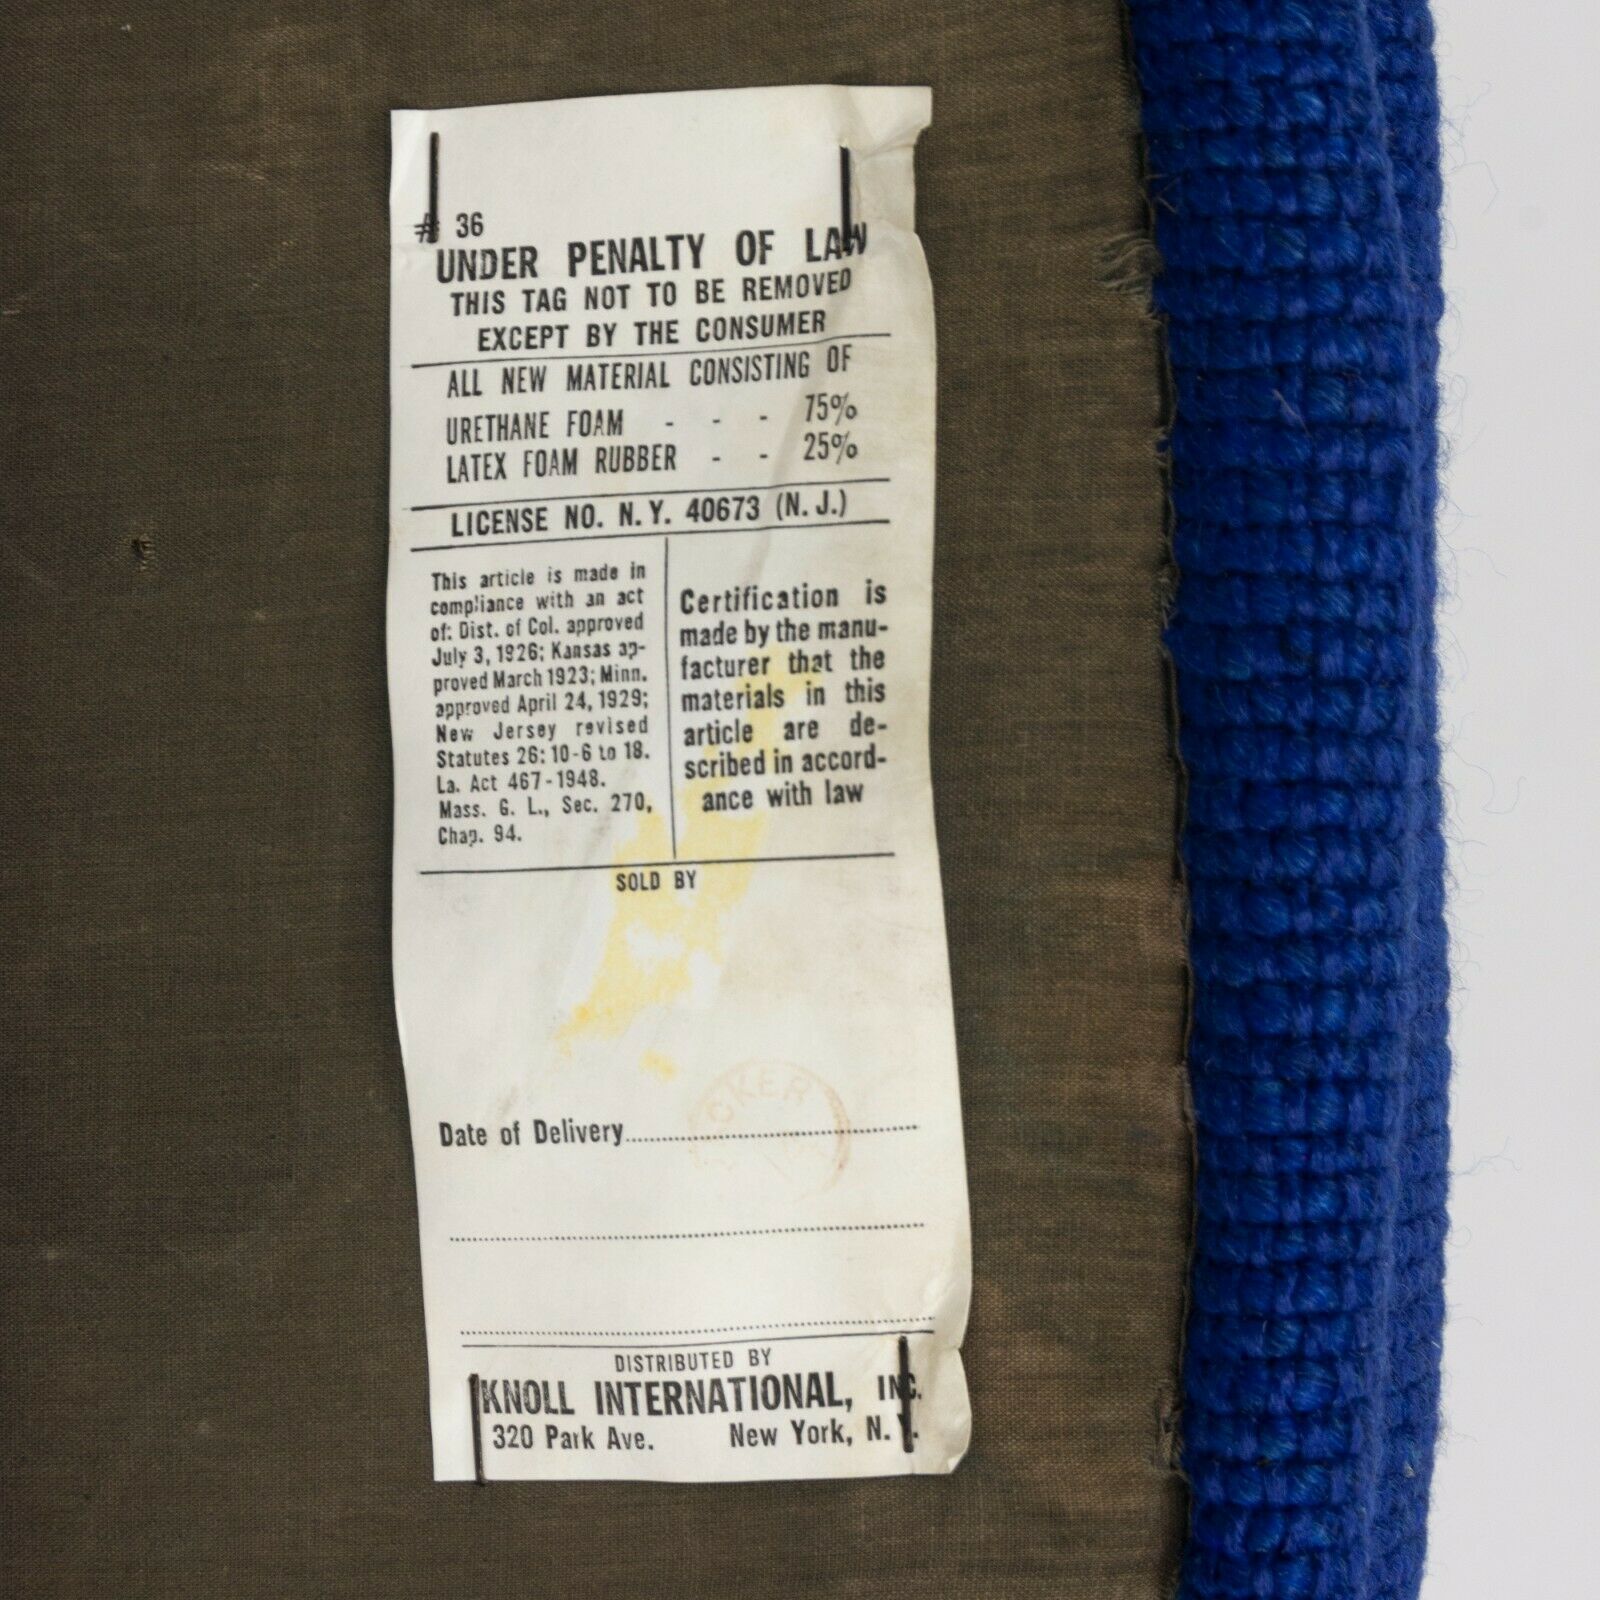 1974 Eero Saarinen for Knoll Rolling Executive Office Chair Original Blue Fabric